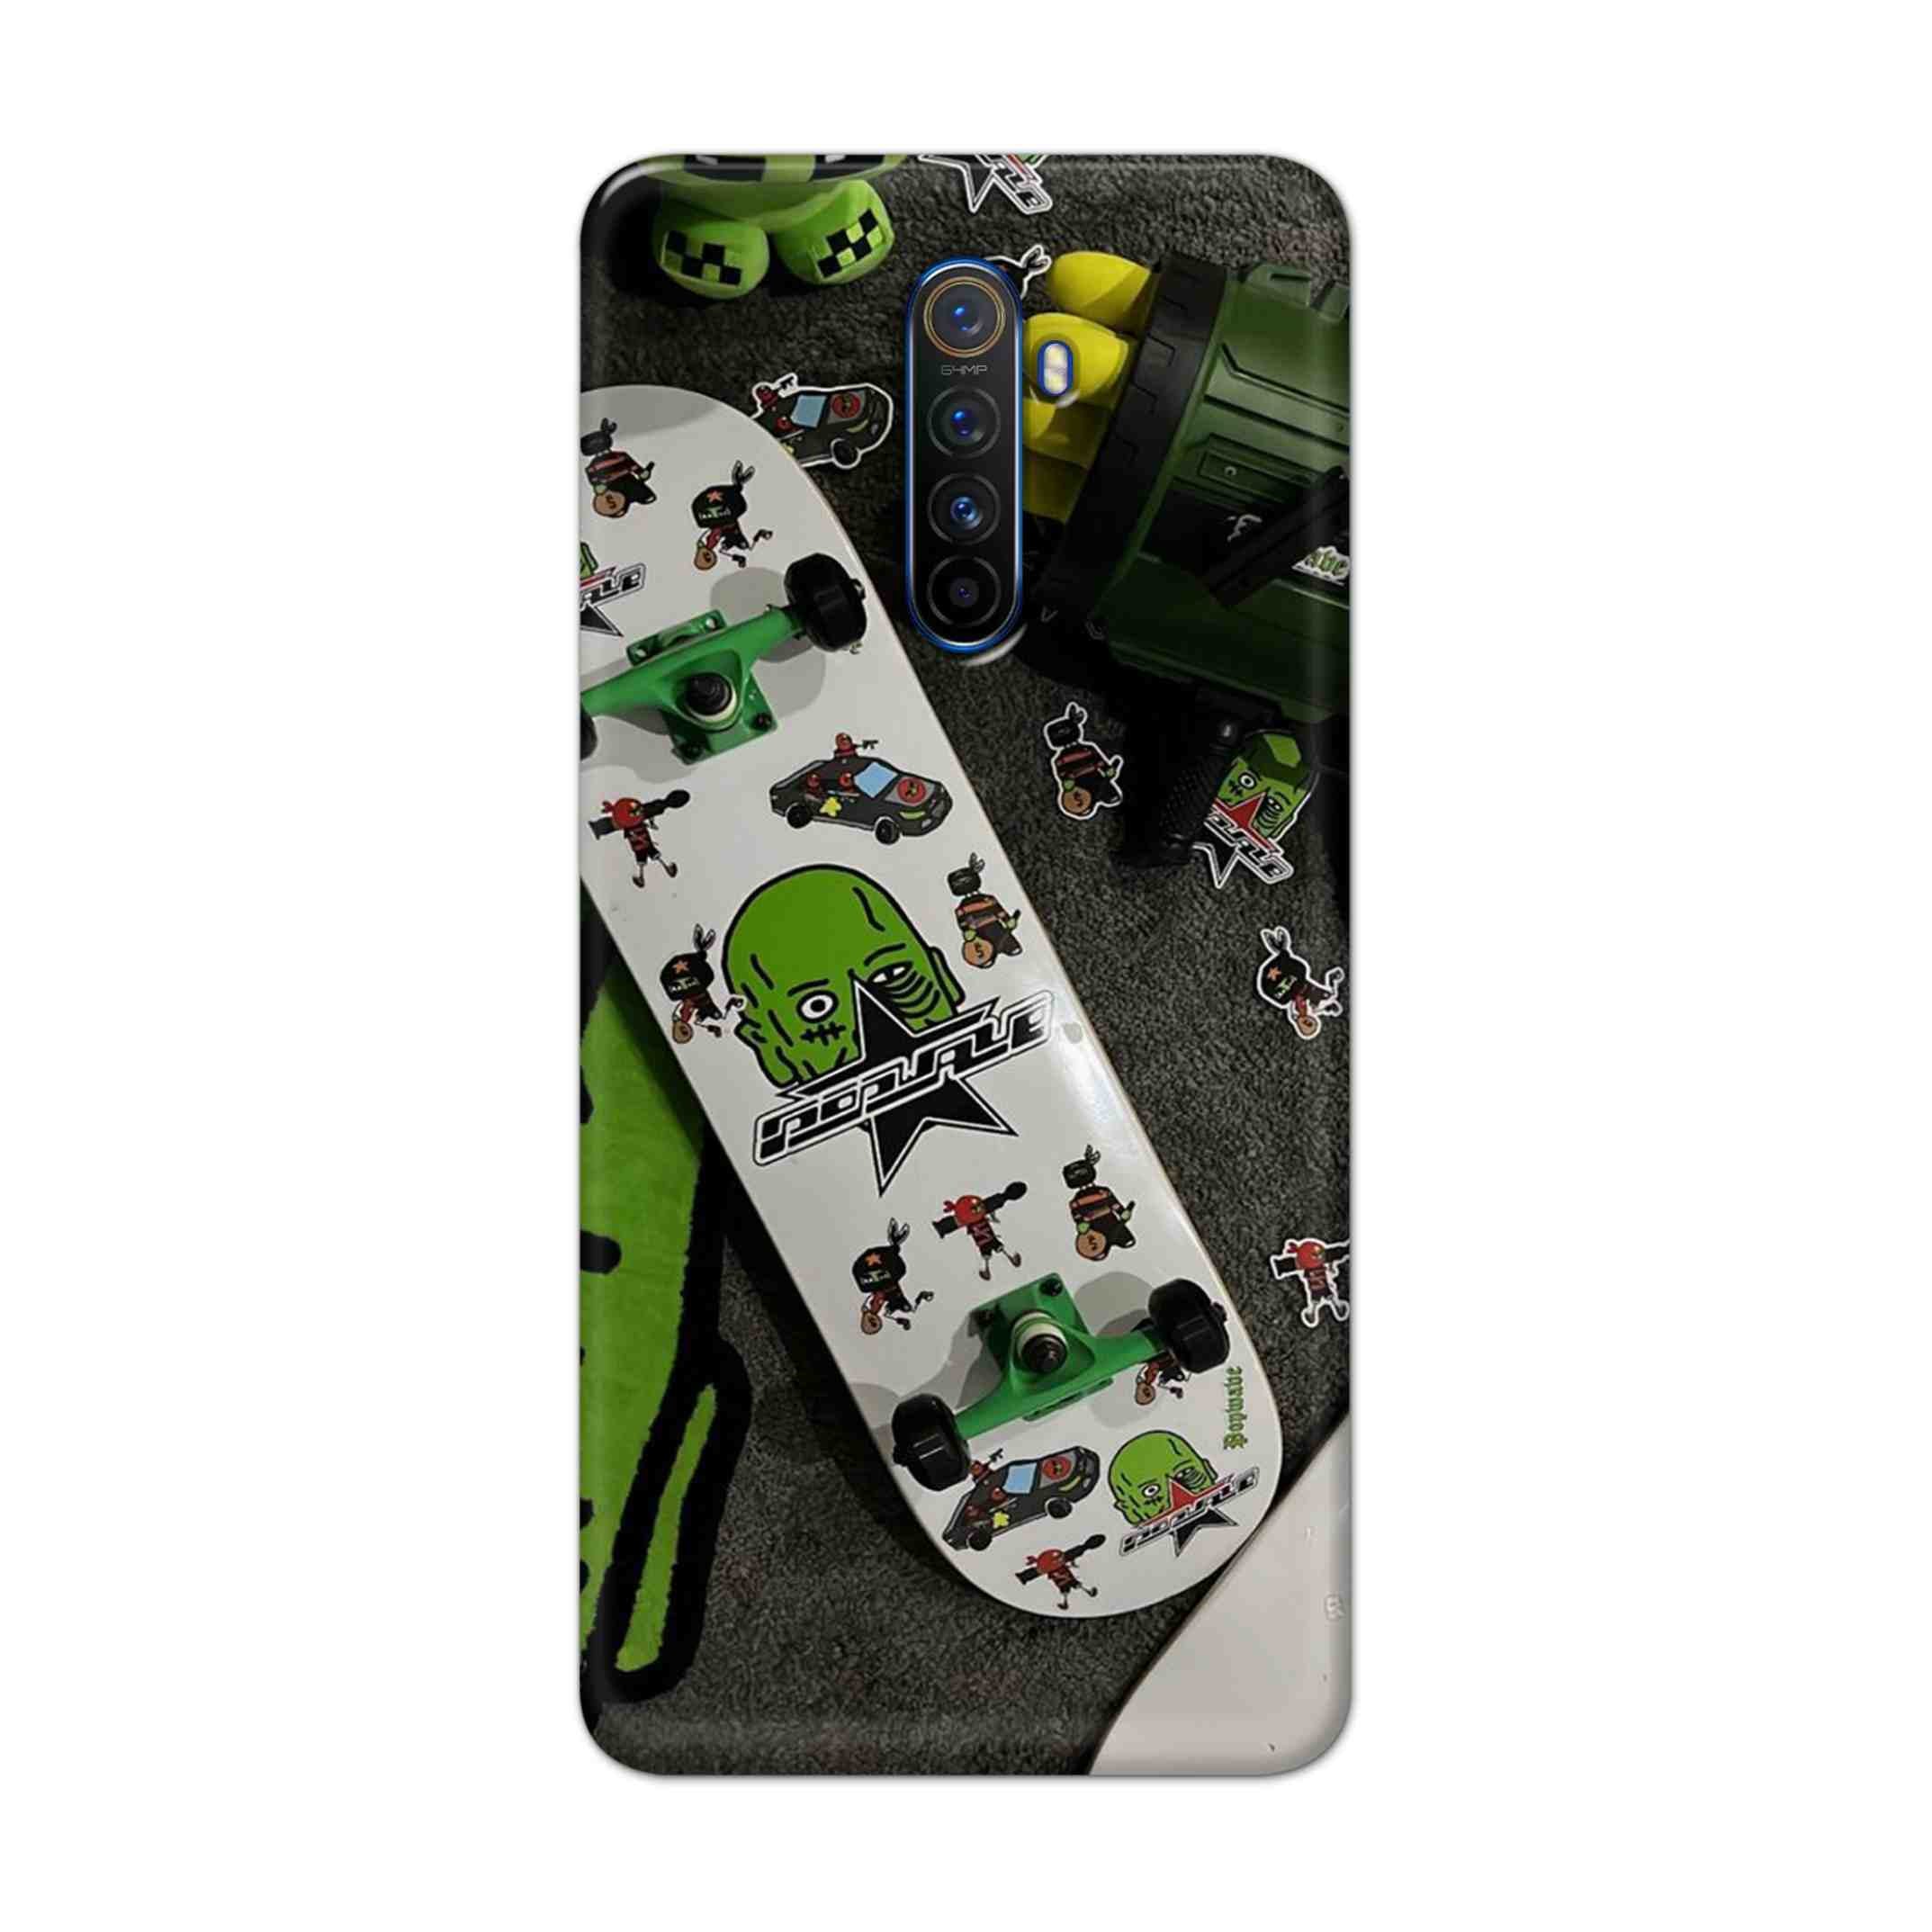 Buy Hulk Skateboard Hard Back Mobile Phone Case Cover For Realme X2 Pro Online